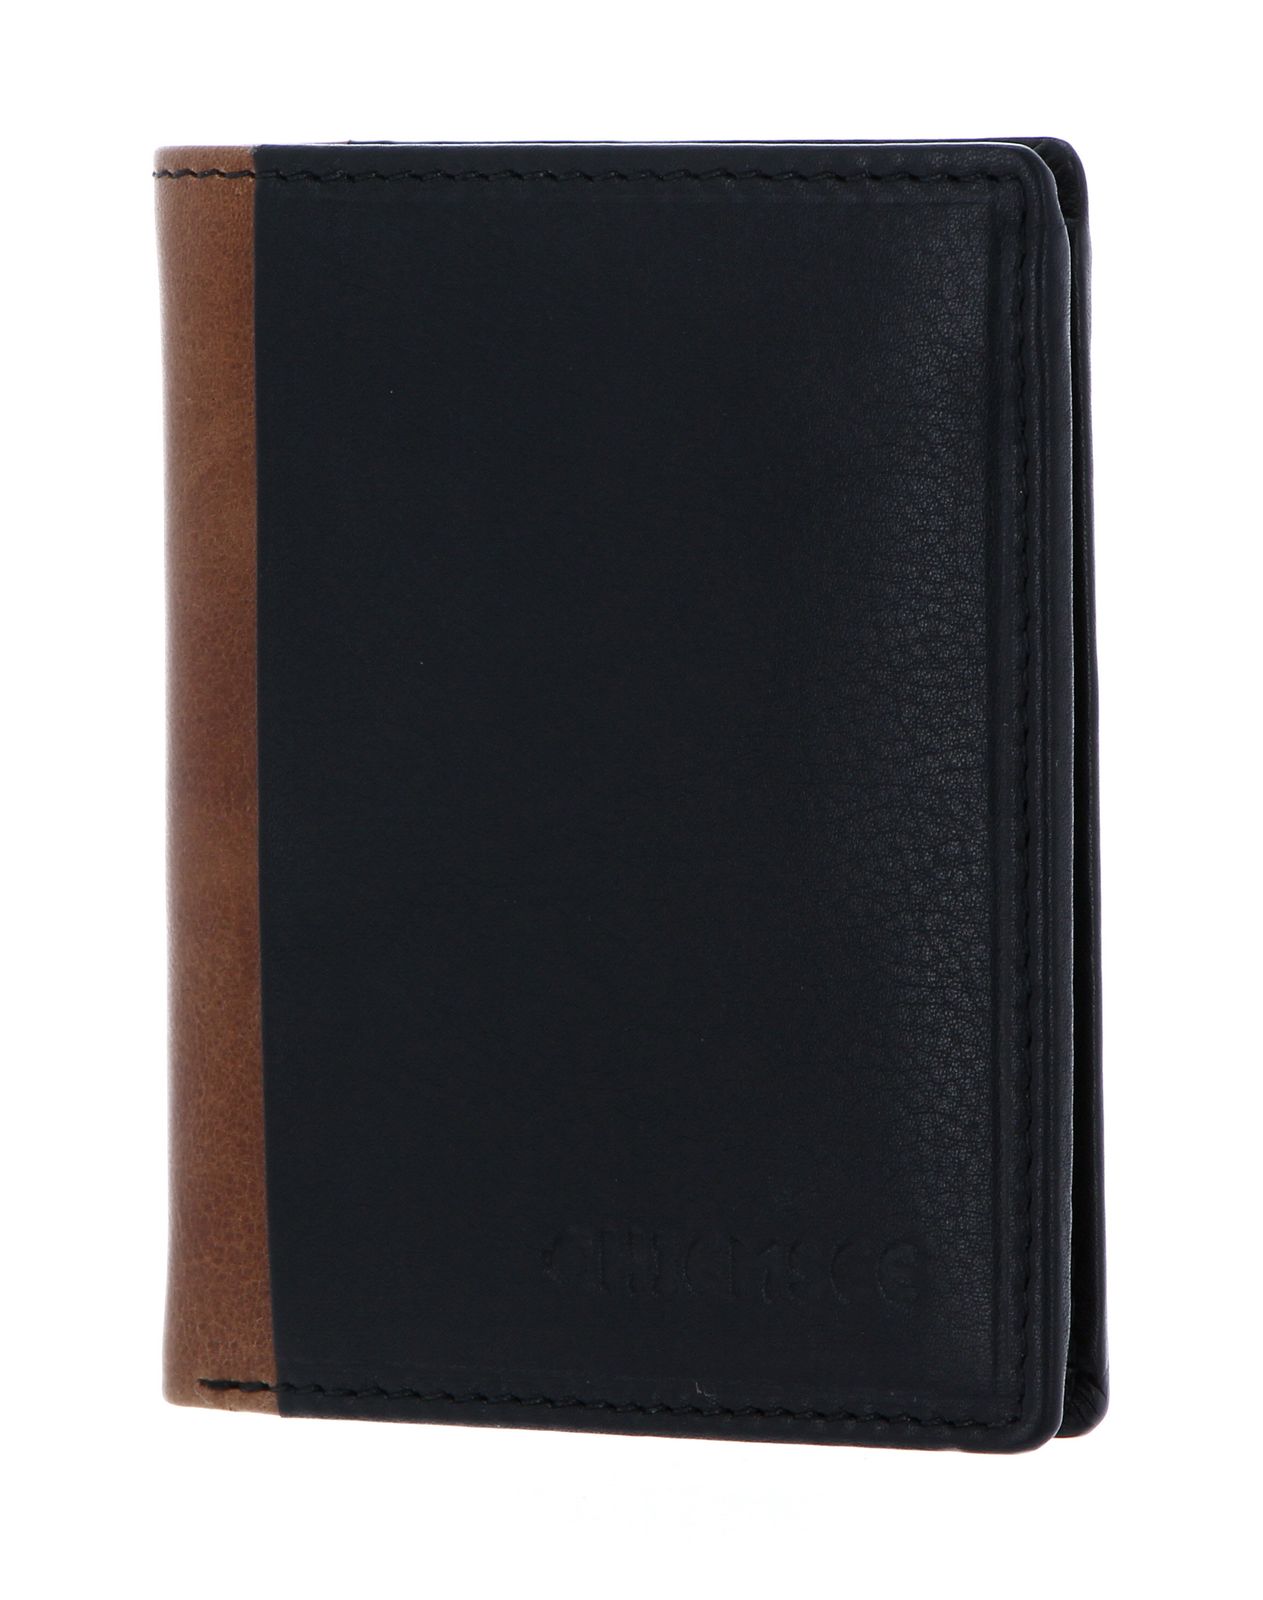 CHIEMSEE Wallet with Flap Black bags, online Buy | | purses & accessories Cognac / modeherz